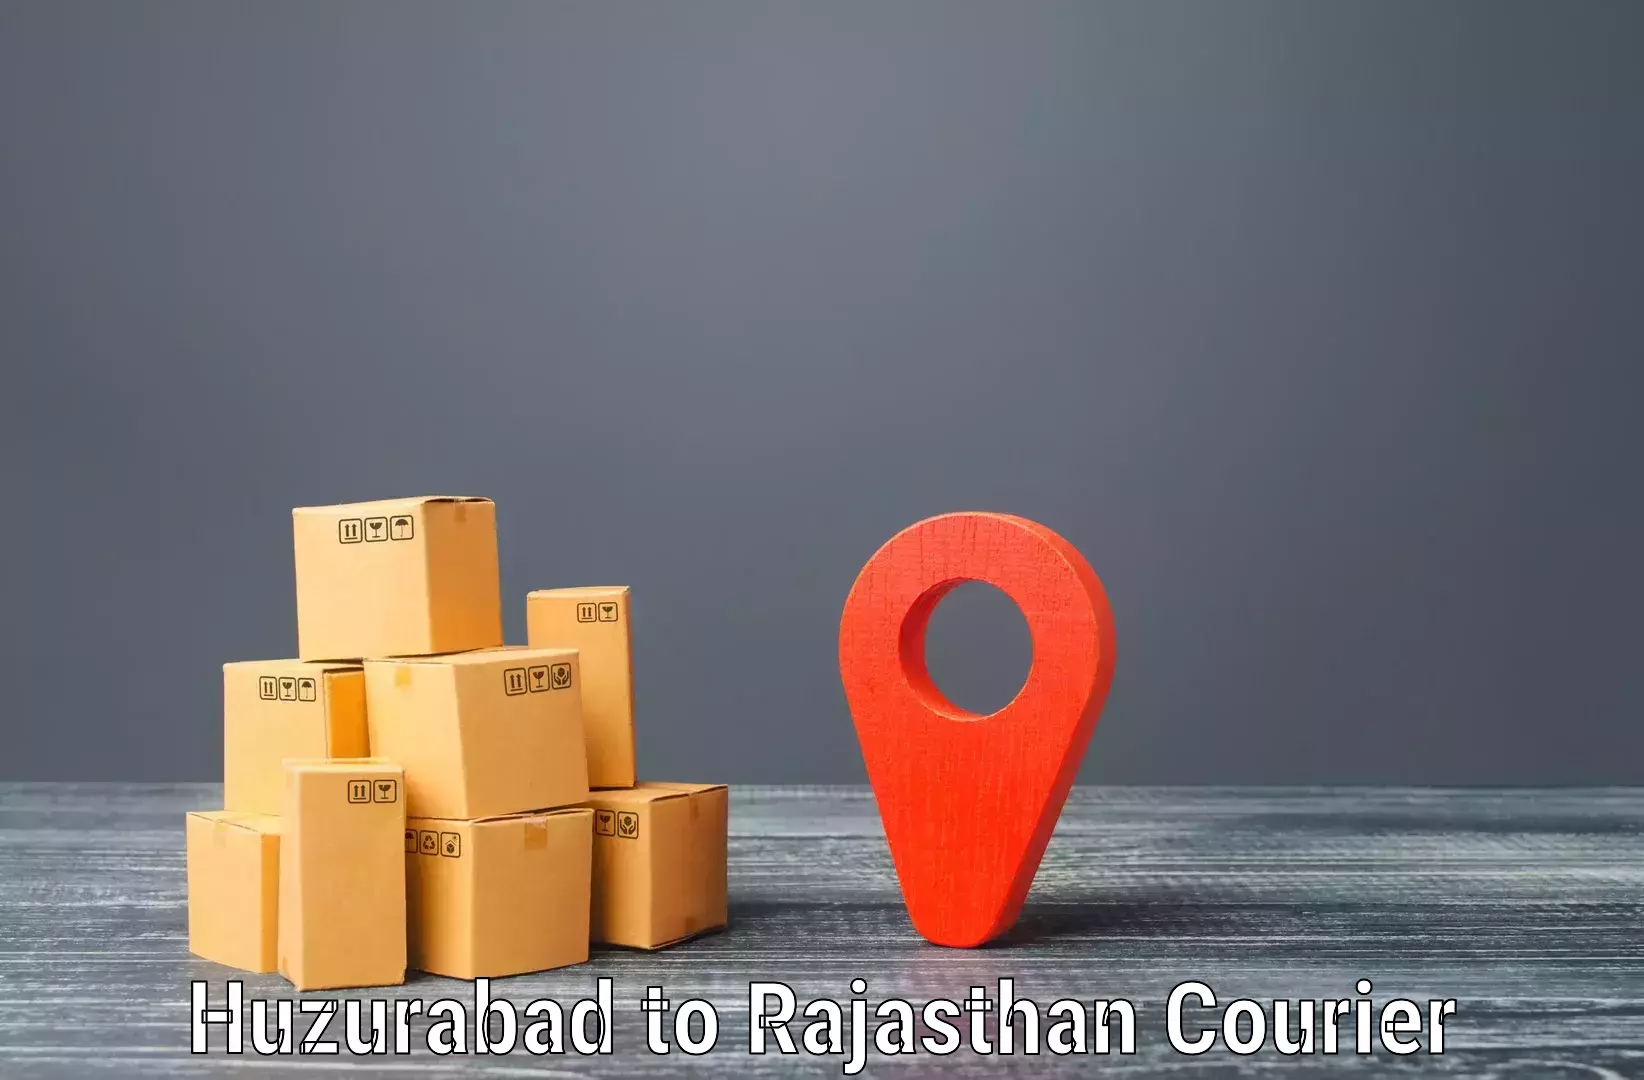 Global courier networks Huzurabad to Didwana